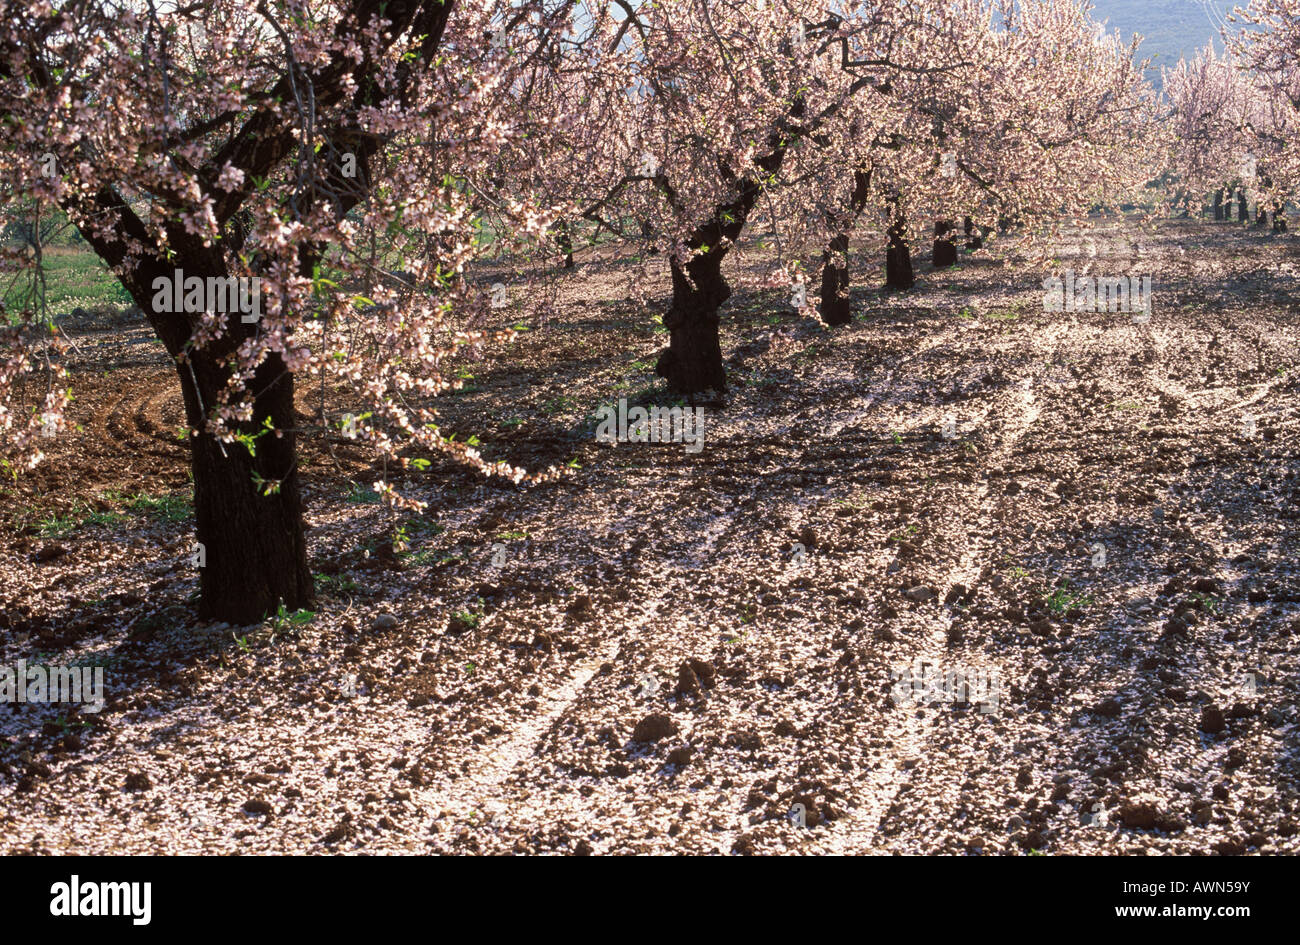 Flowering almond trees, Valencia, Spain Stock Photo